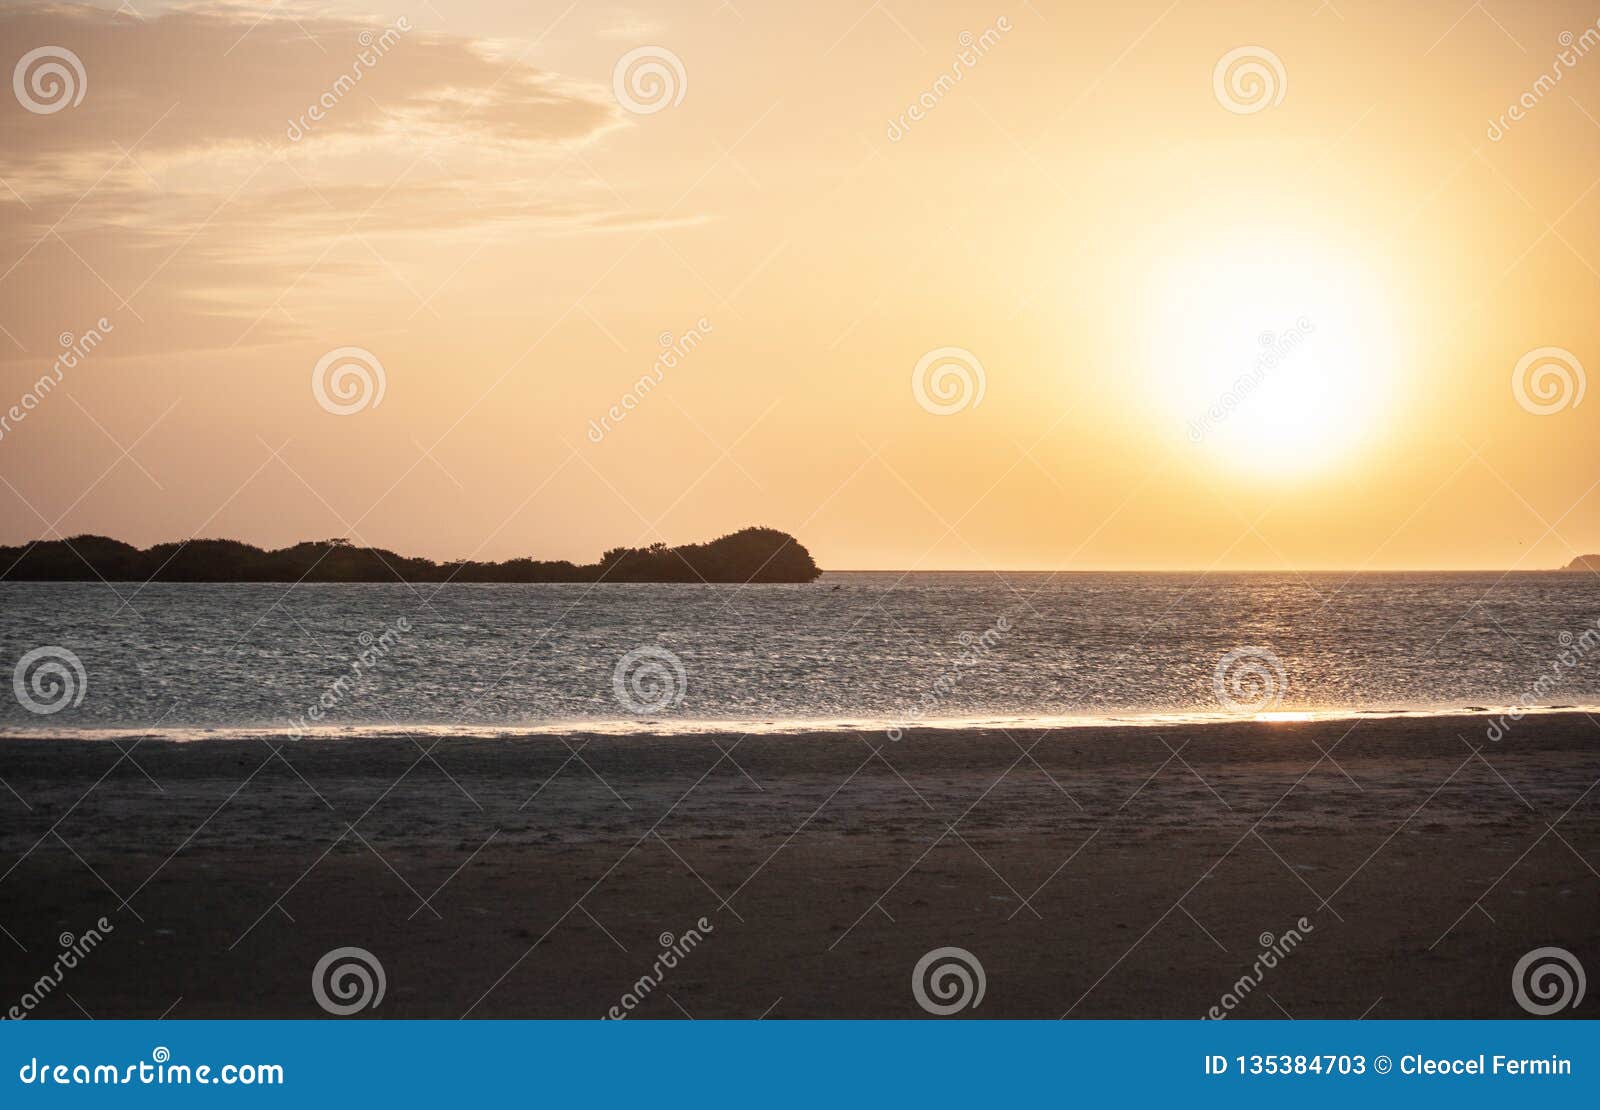 blues, brown, and water beautiful escene small twon coche margarita island